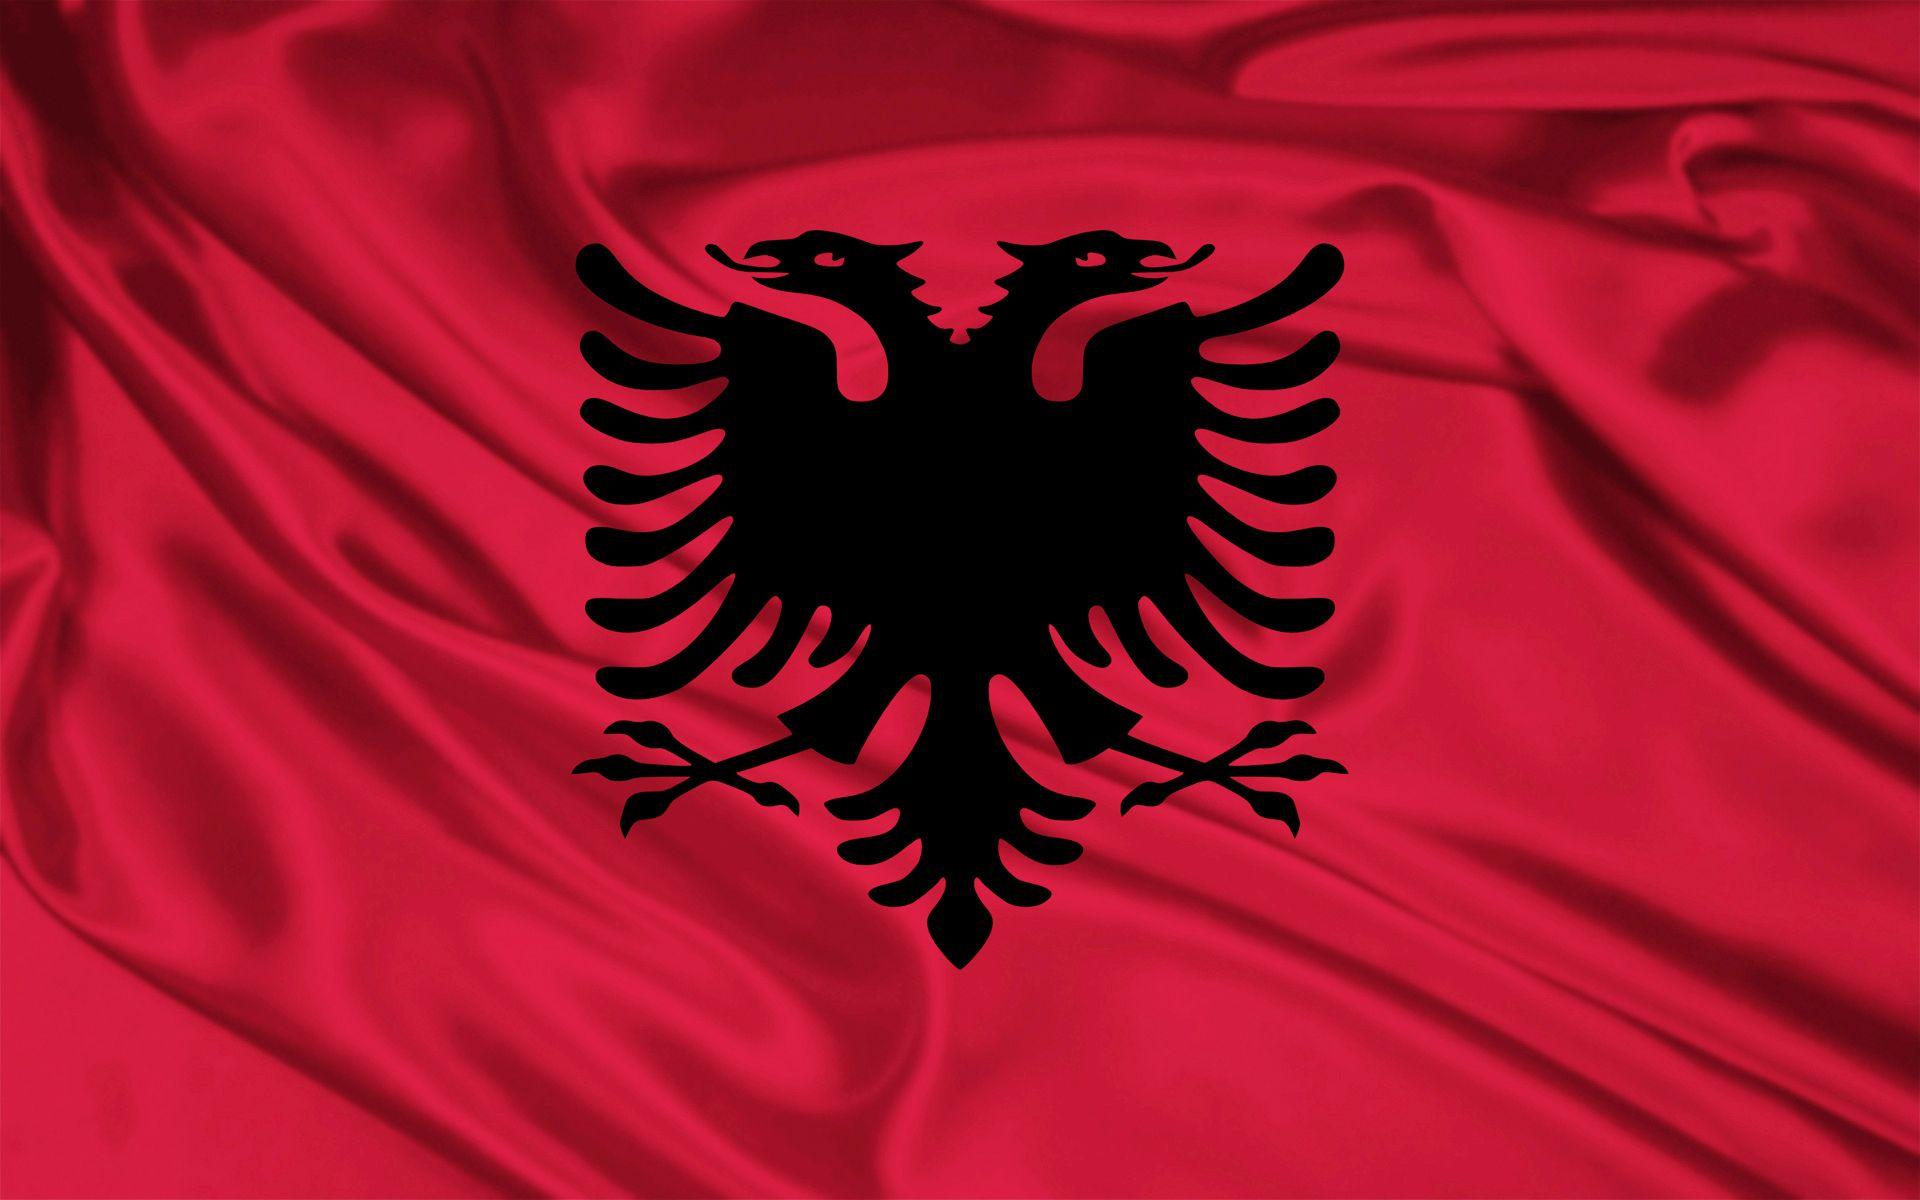 Bandera de Albania fondos de pantalla. Bandera de Albania fotos